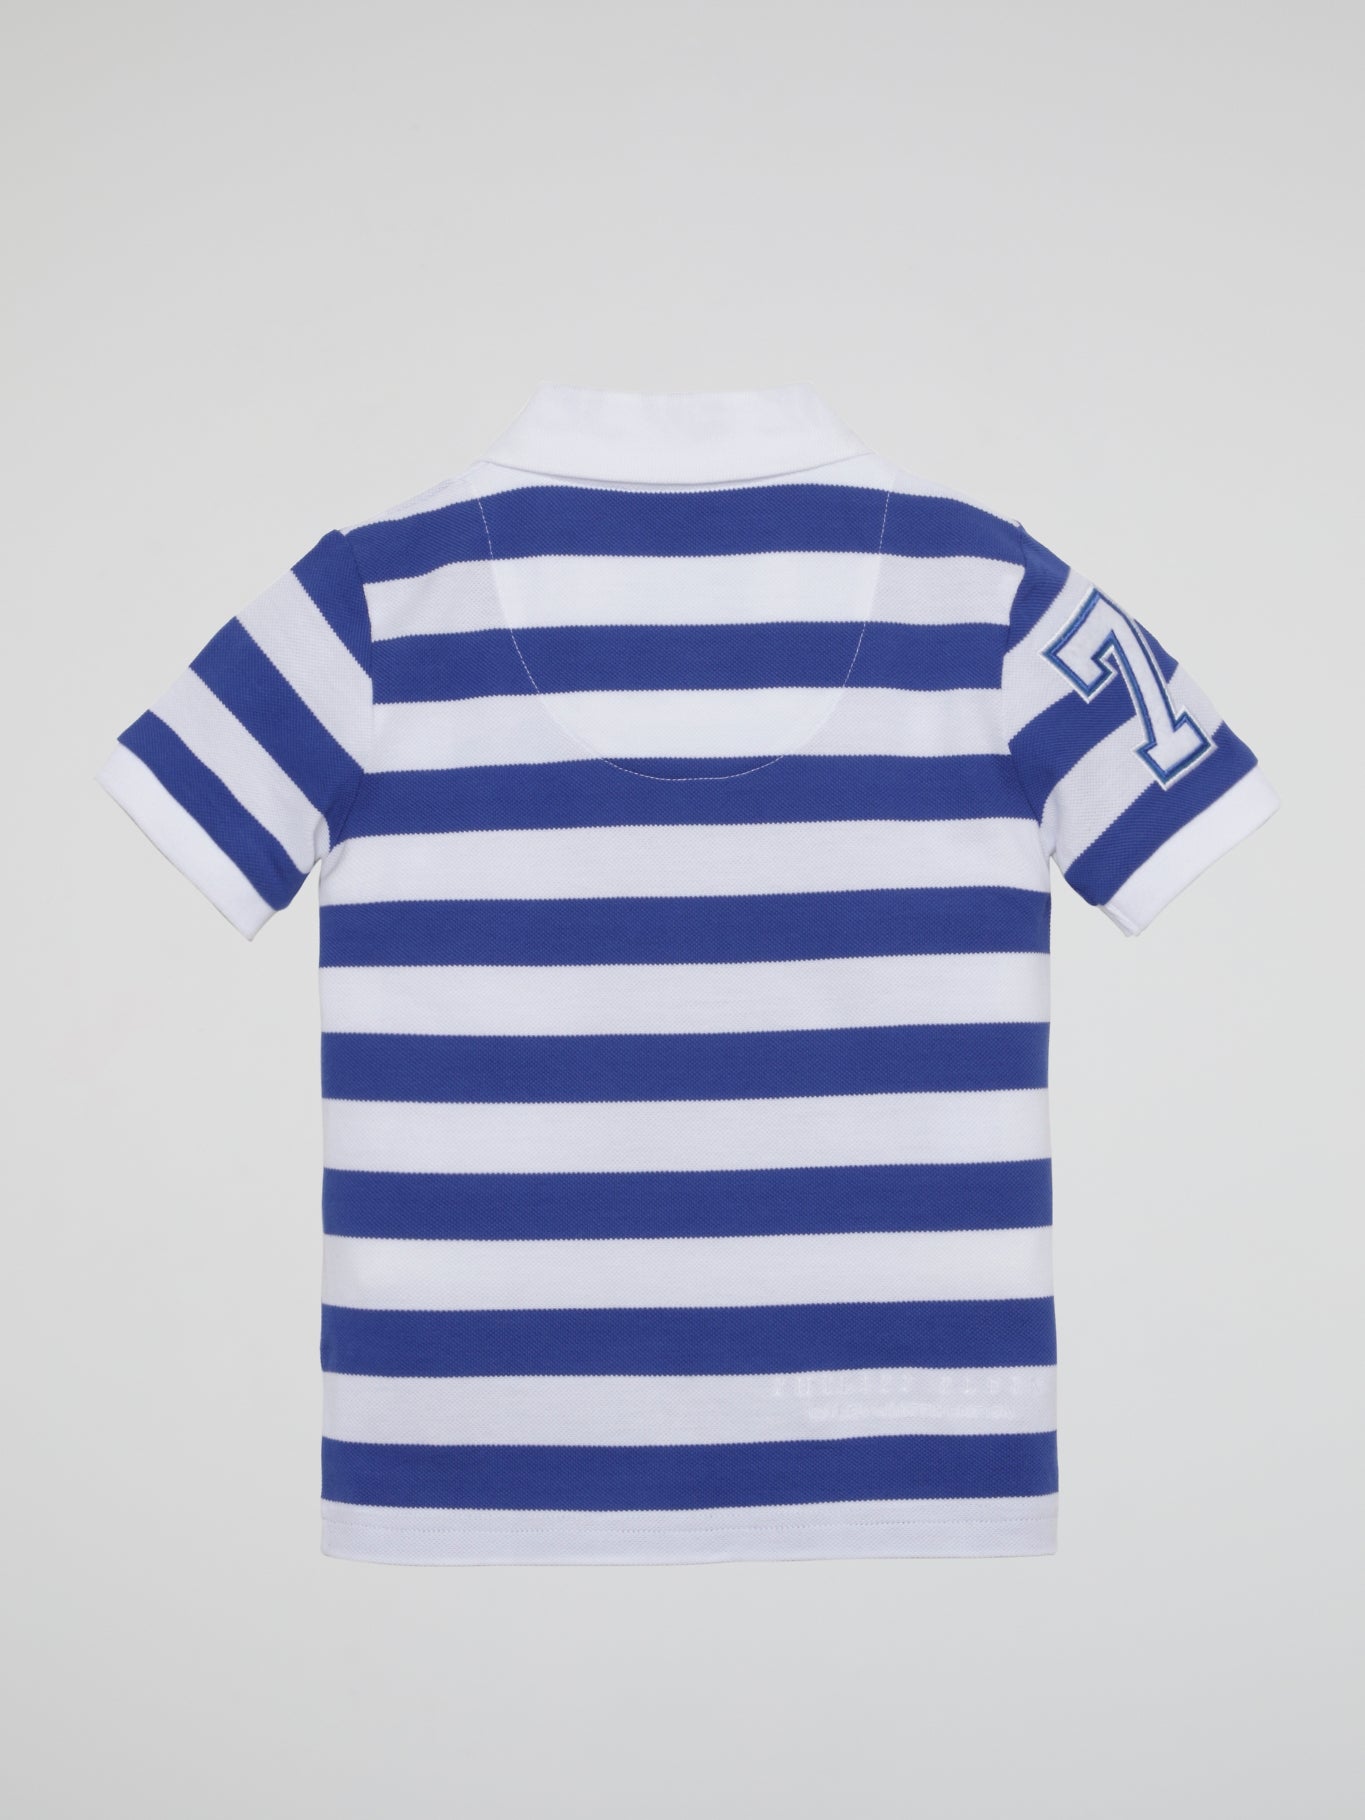 Blue Striped Polo Shirt (Kids)